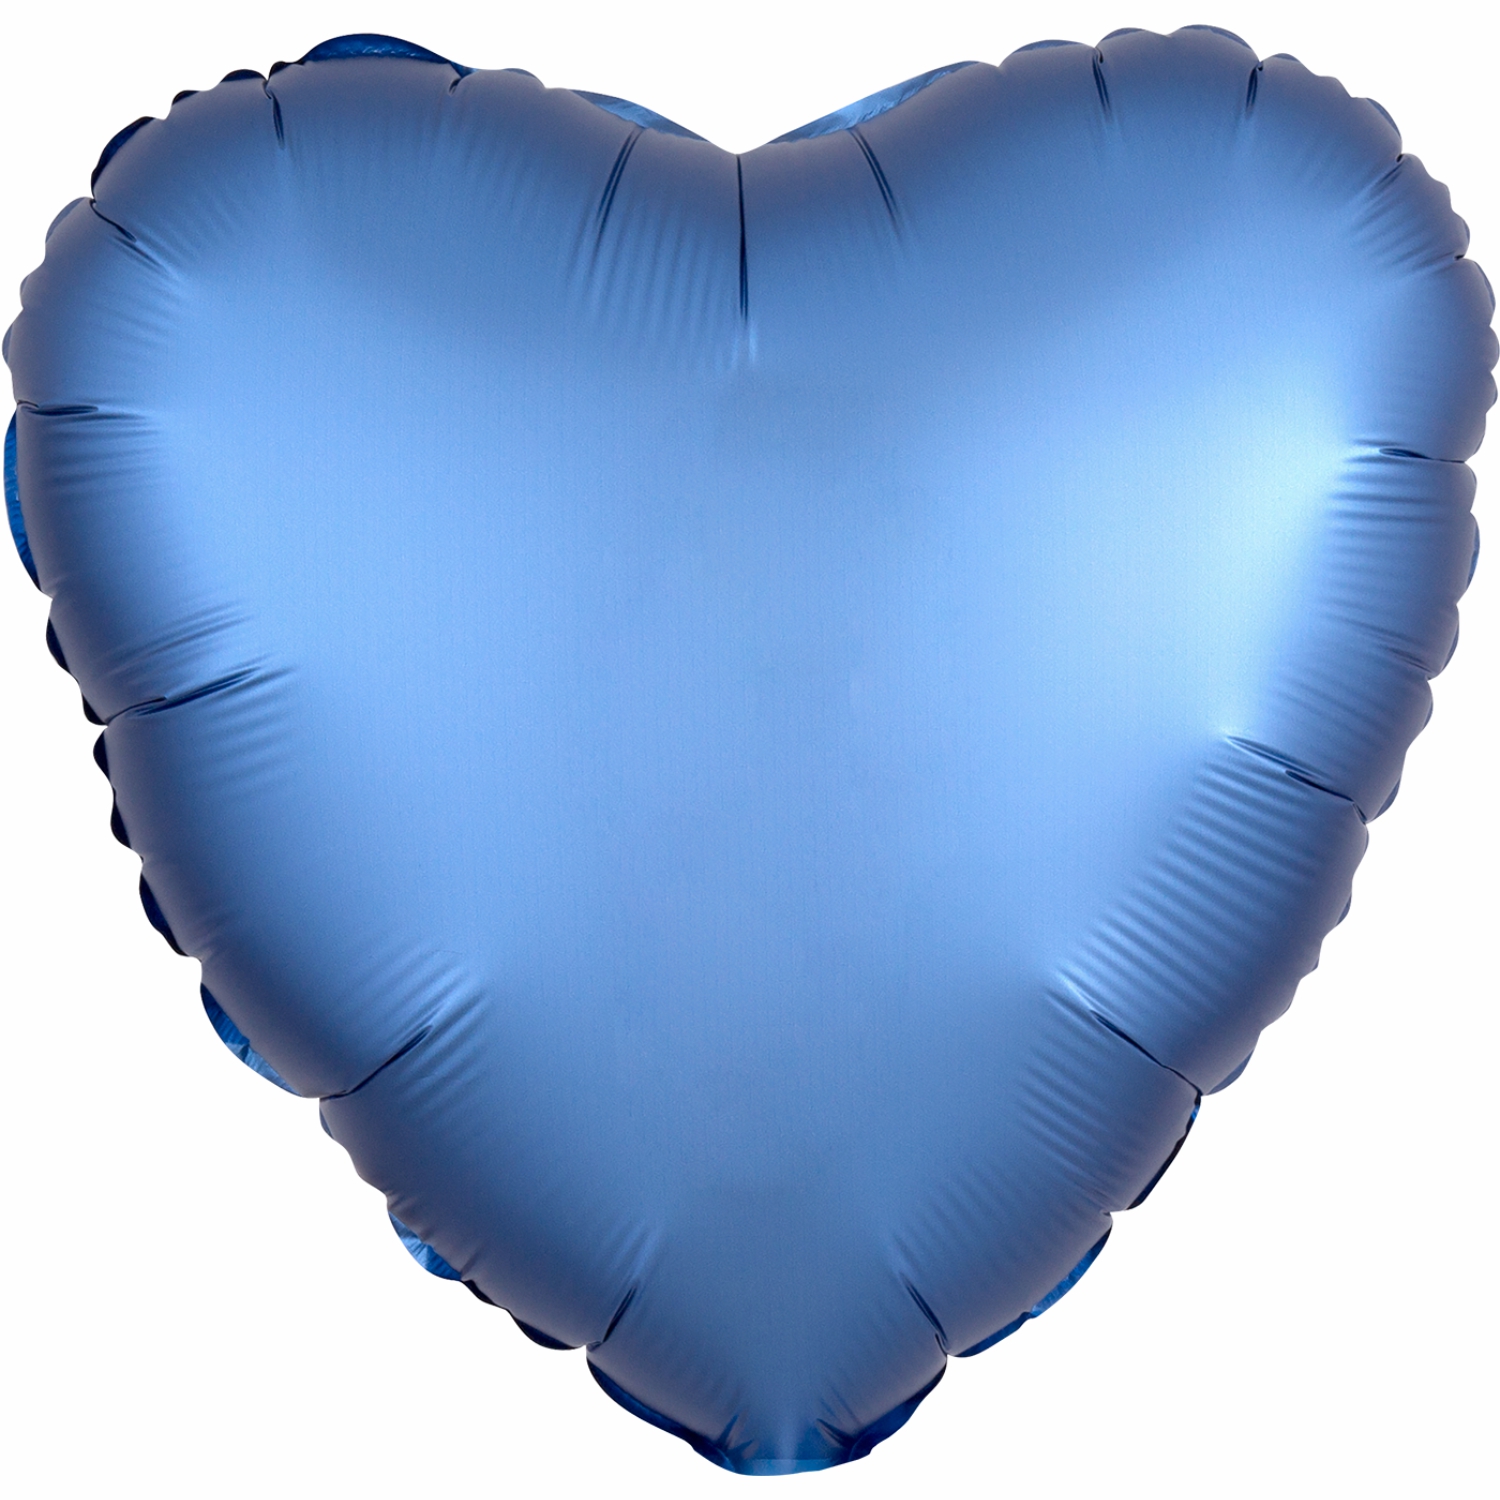 http://images.officebrain.com/migration-api-hidden-new/web/images/626/myrn-heart-azure-blue.jpg